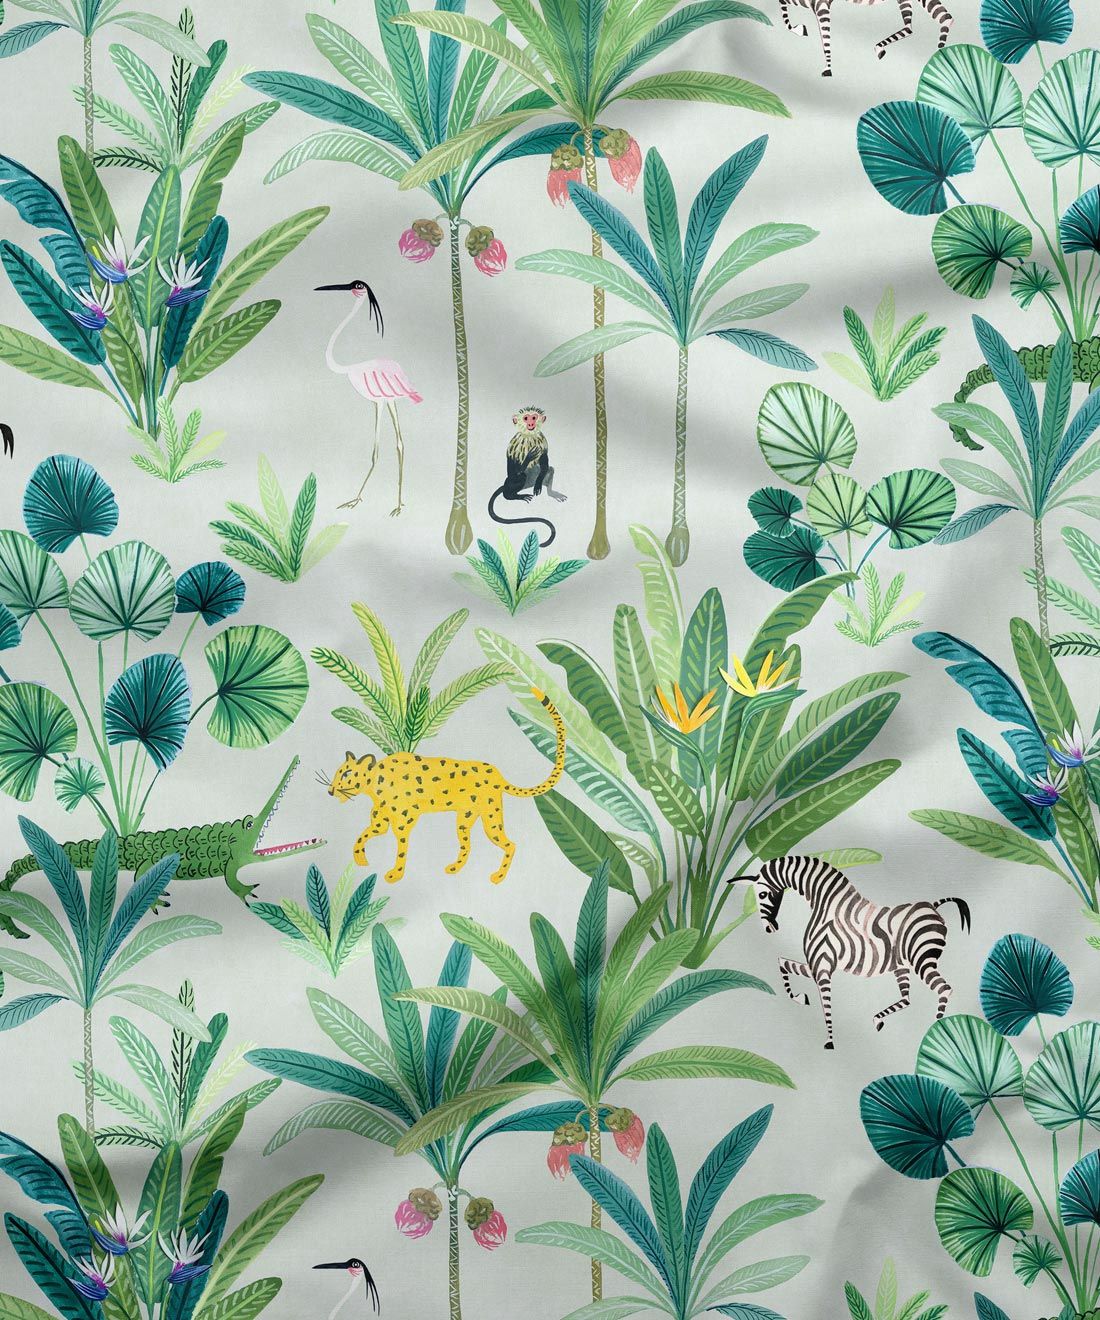 Animal Kingdom Fabric • Bethany Linz • Milton & King UK